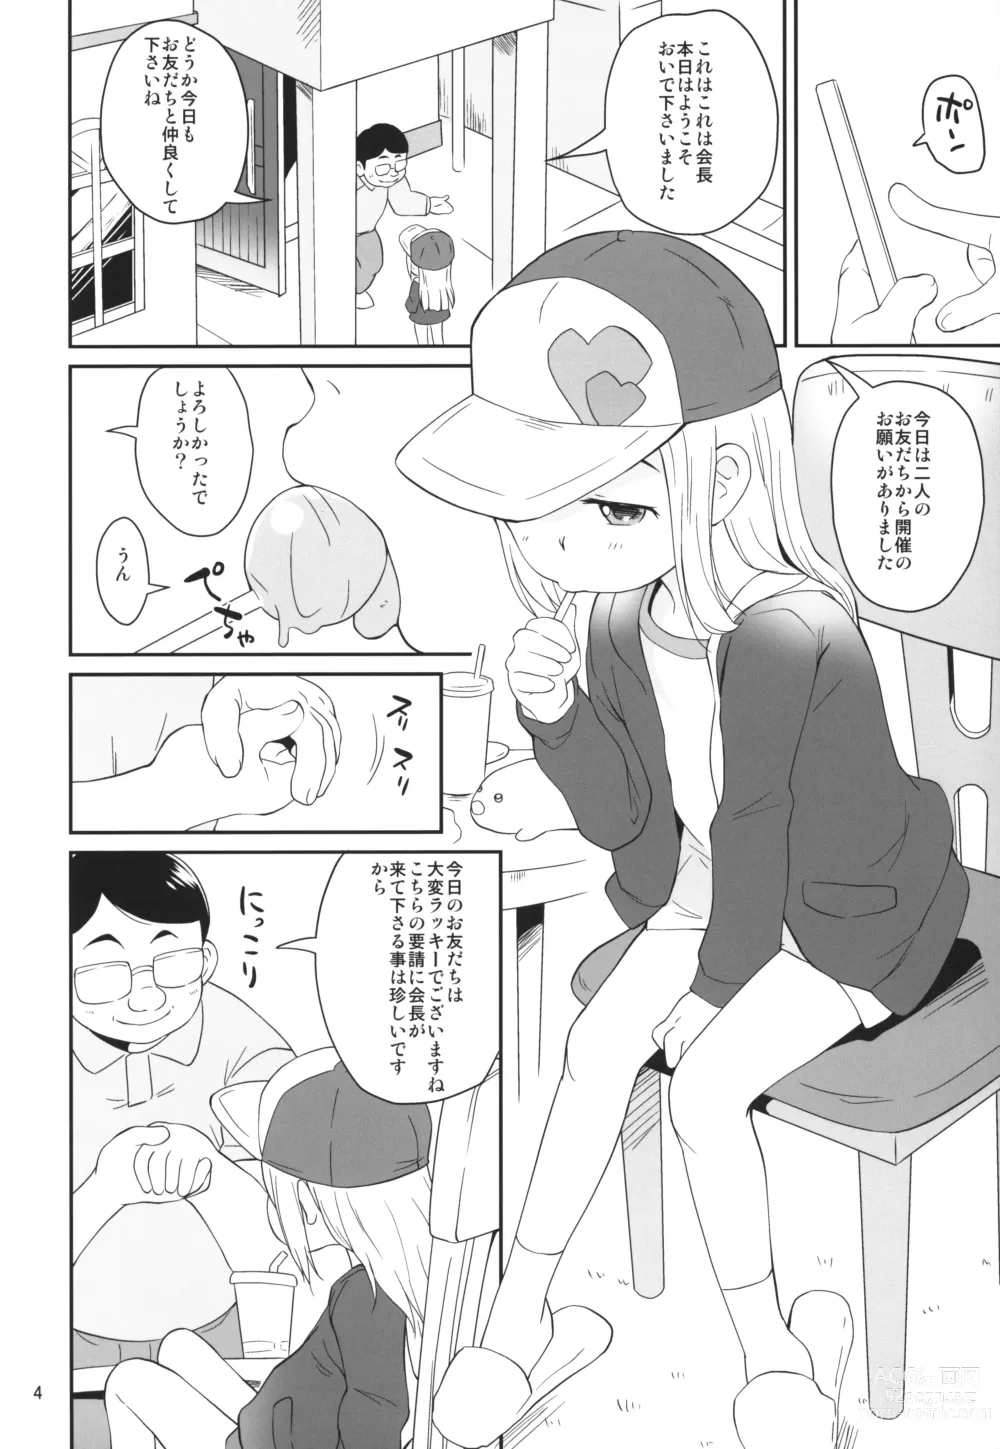 Page 3 of doujinshi Otomodachi Kai